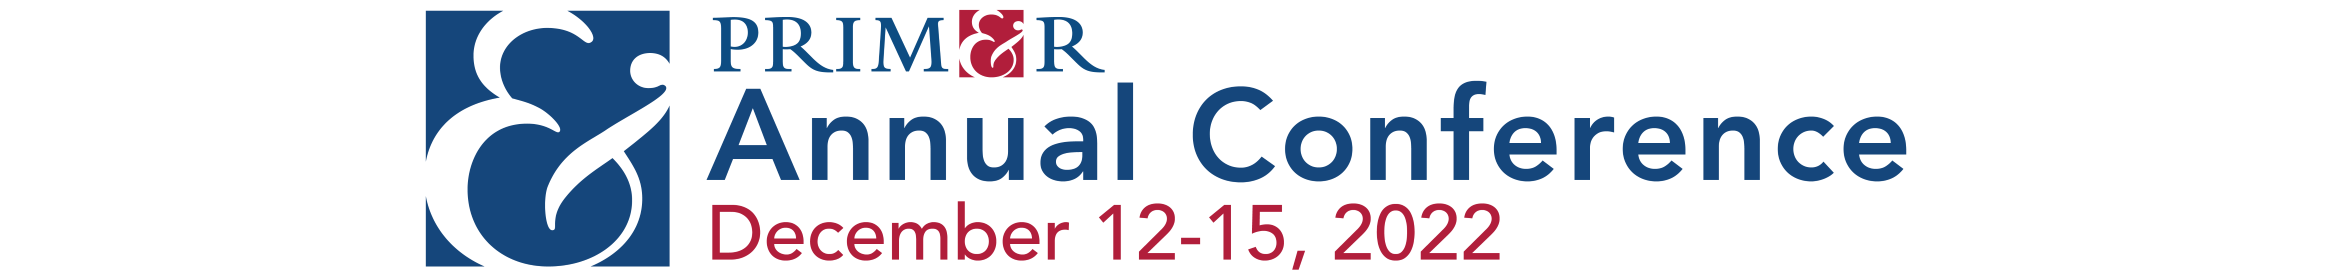 2022 PRIM&R Annual Conference Main banner